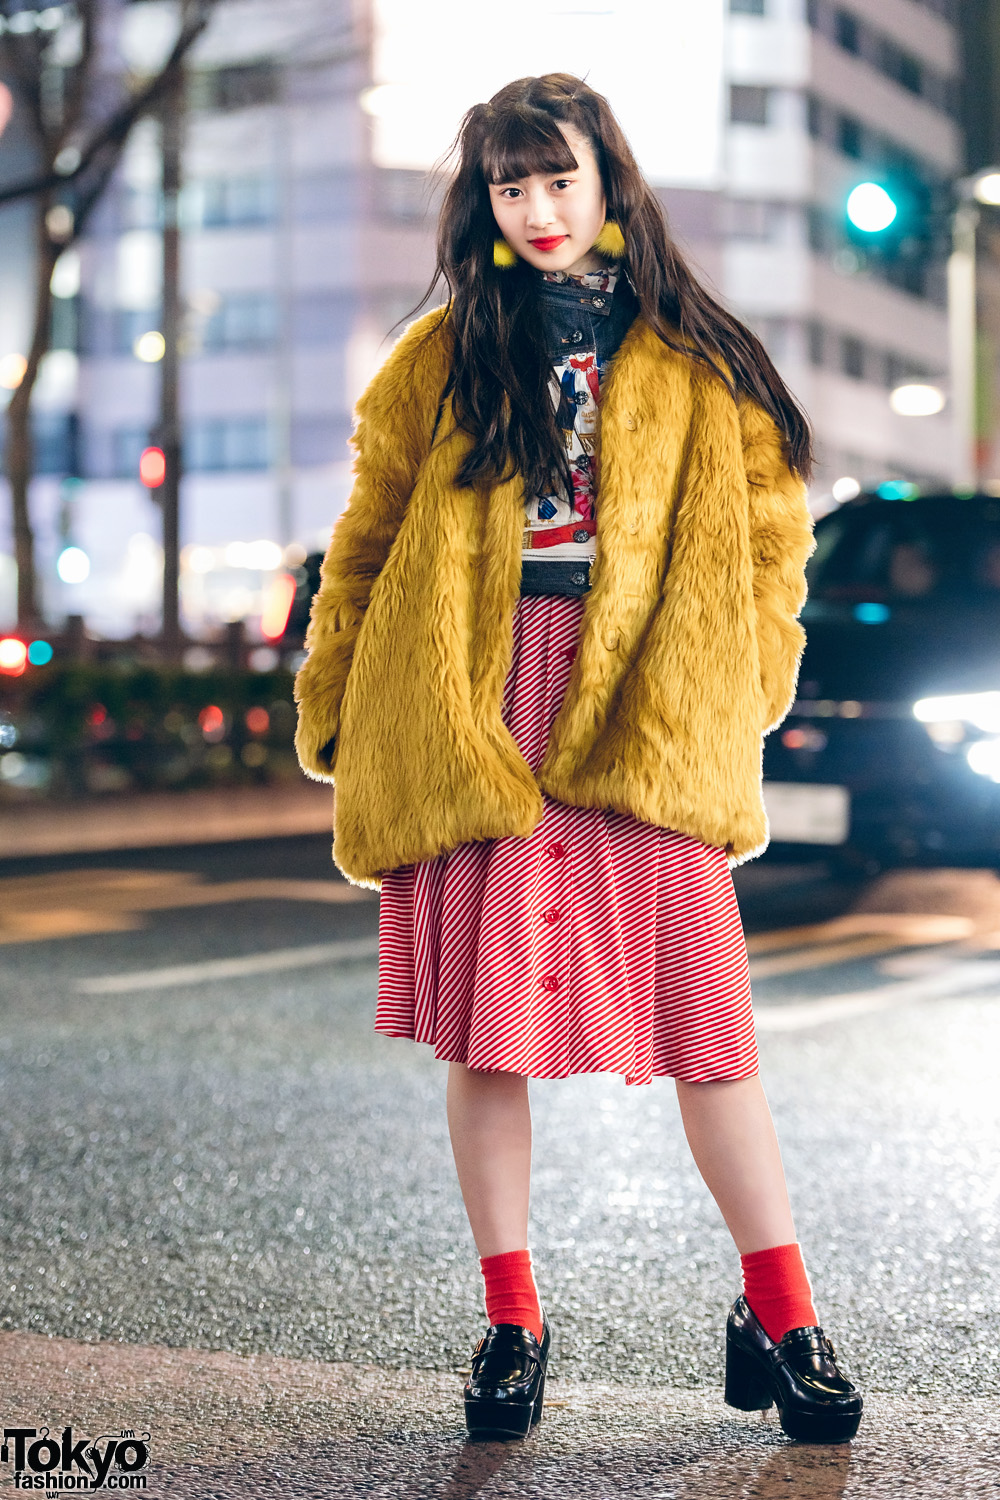 Model & Pop Idol w/ WEGO Fuzzy Coat, Vintage Graphic Print Top & Sevens Striped Skirt in Harajuku